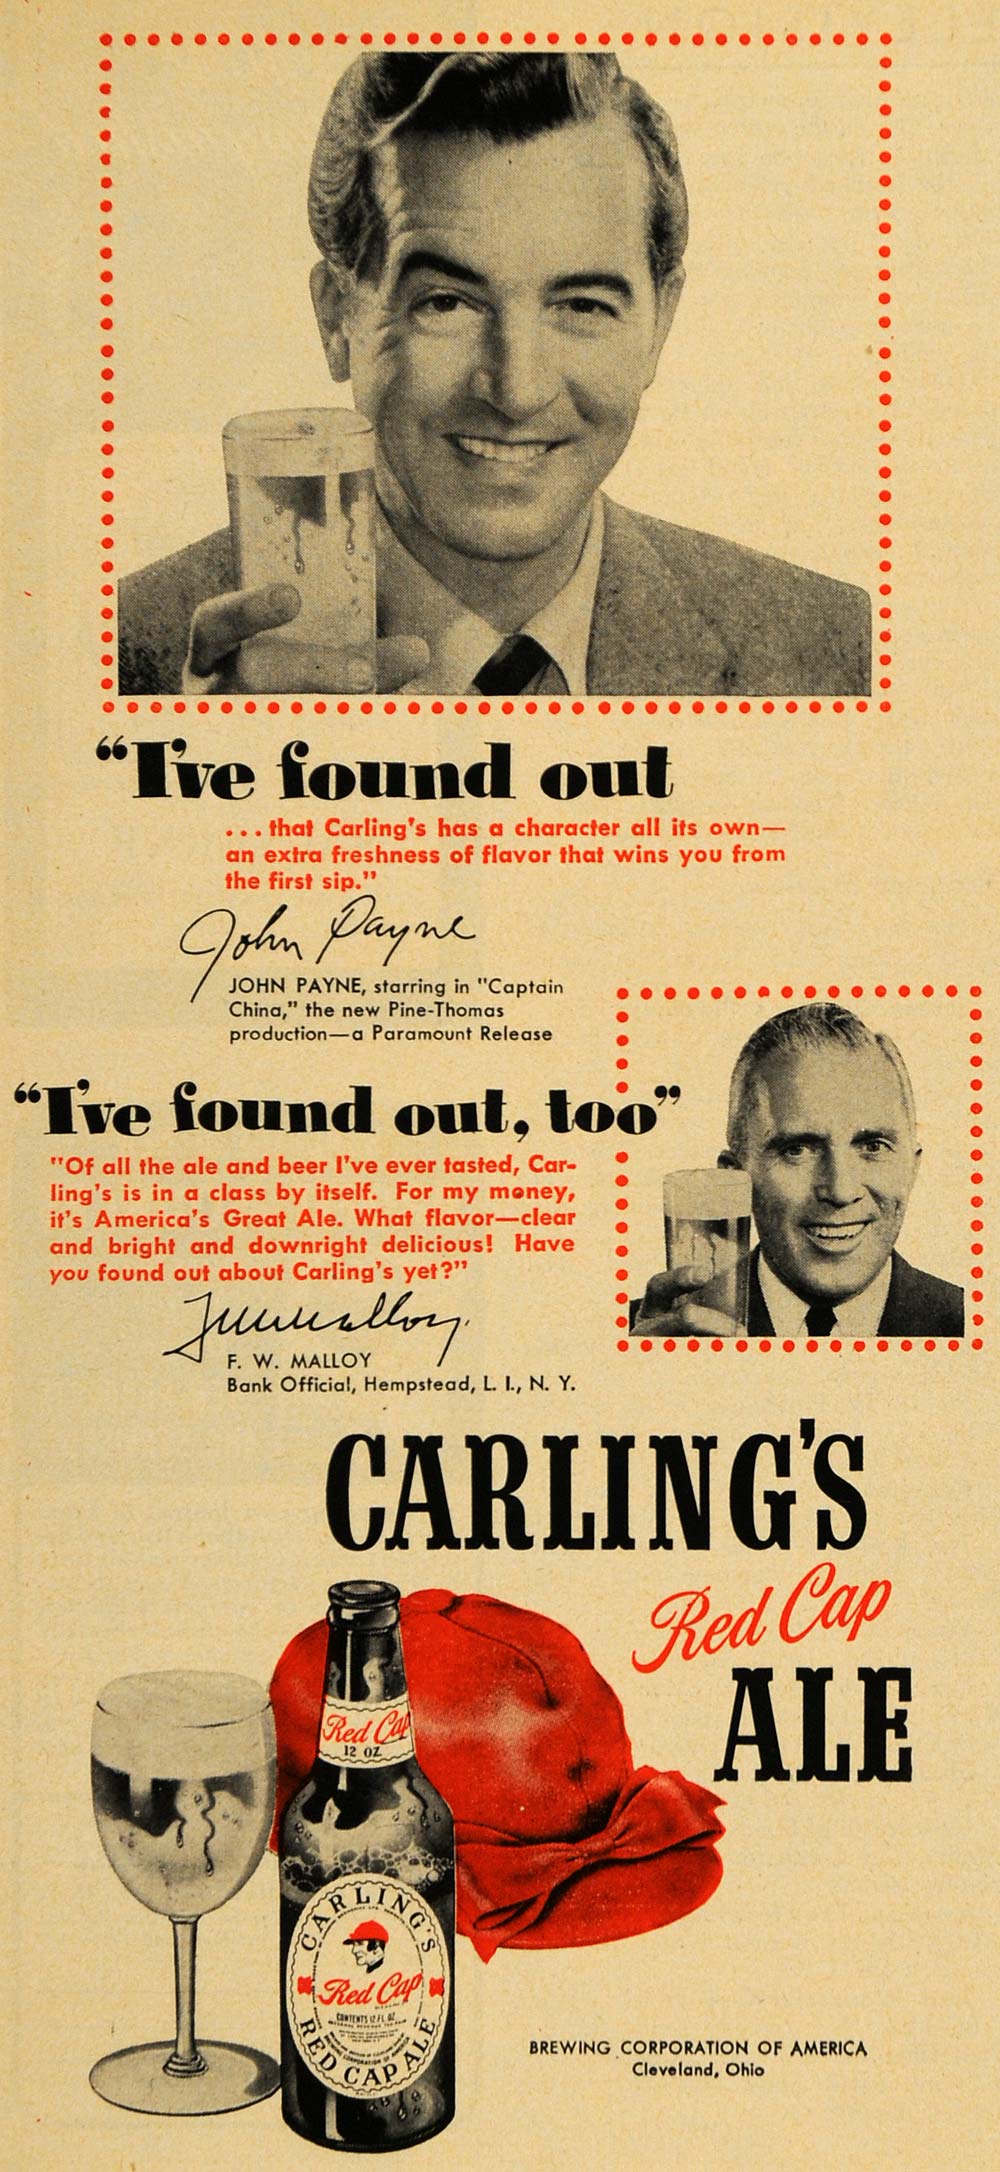 1950 Ad John Payne Carling's Red Cap Ale F. W. Malloy - ORIGINAL ADVERTISING TM5